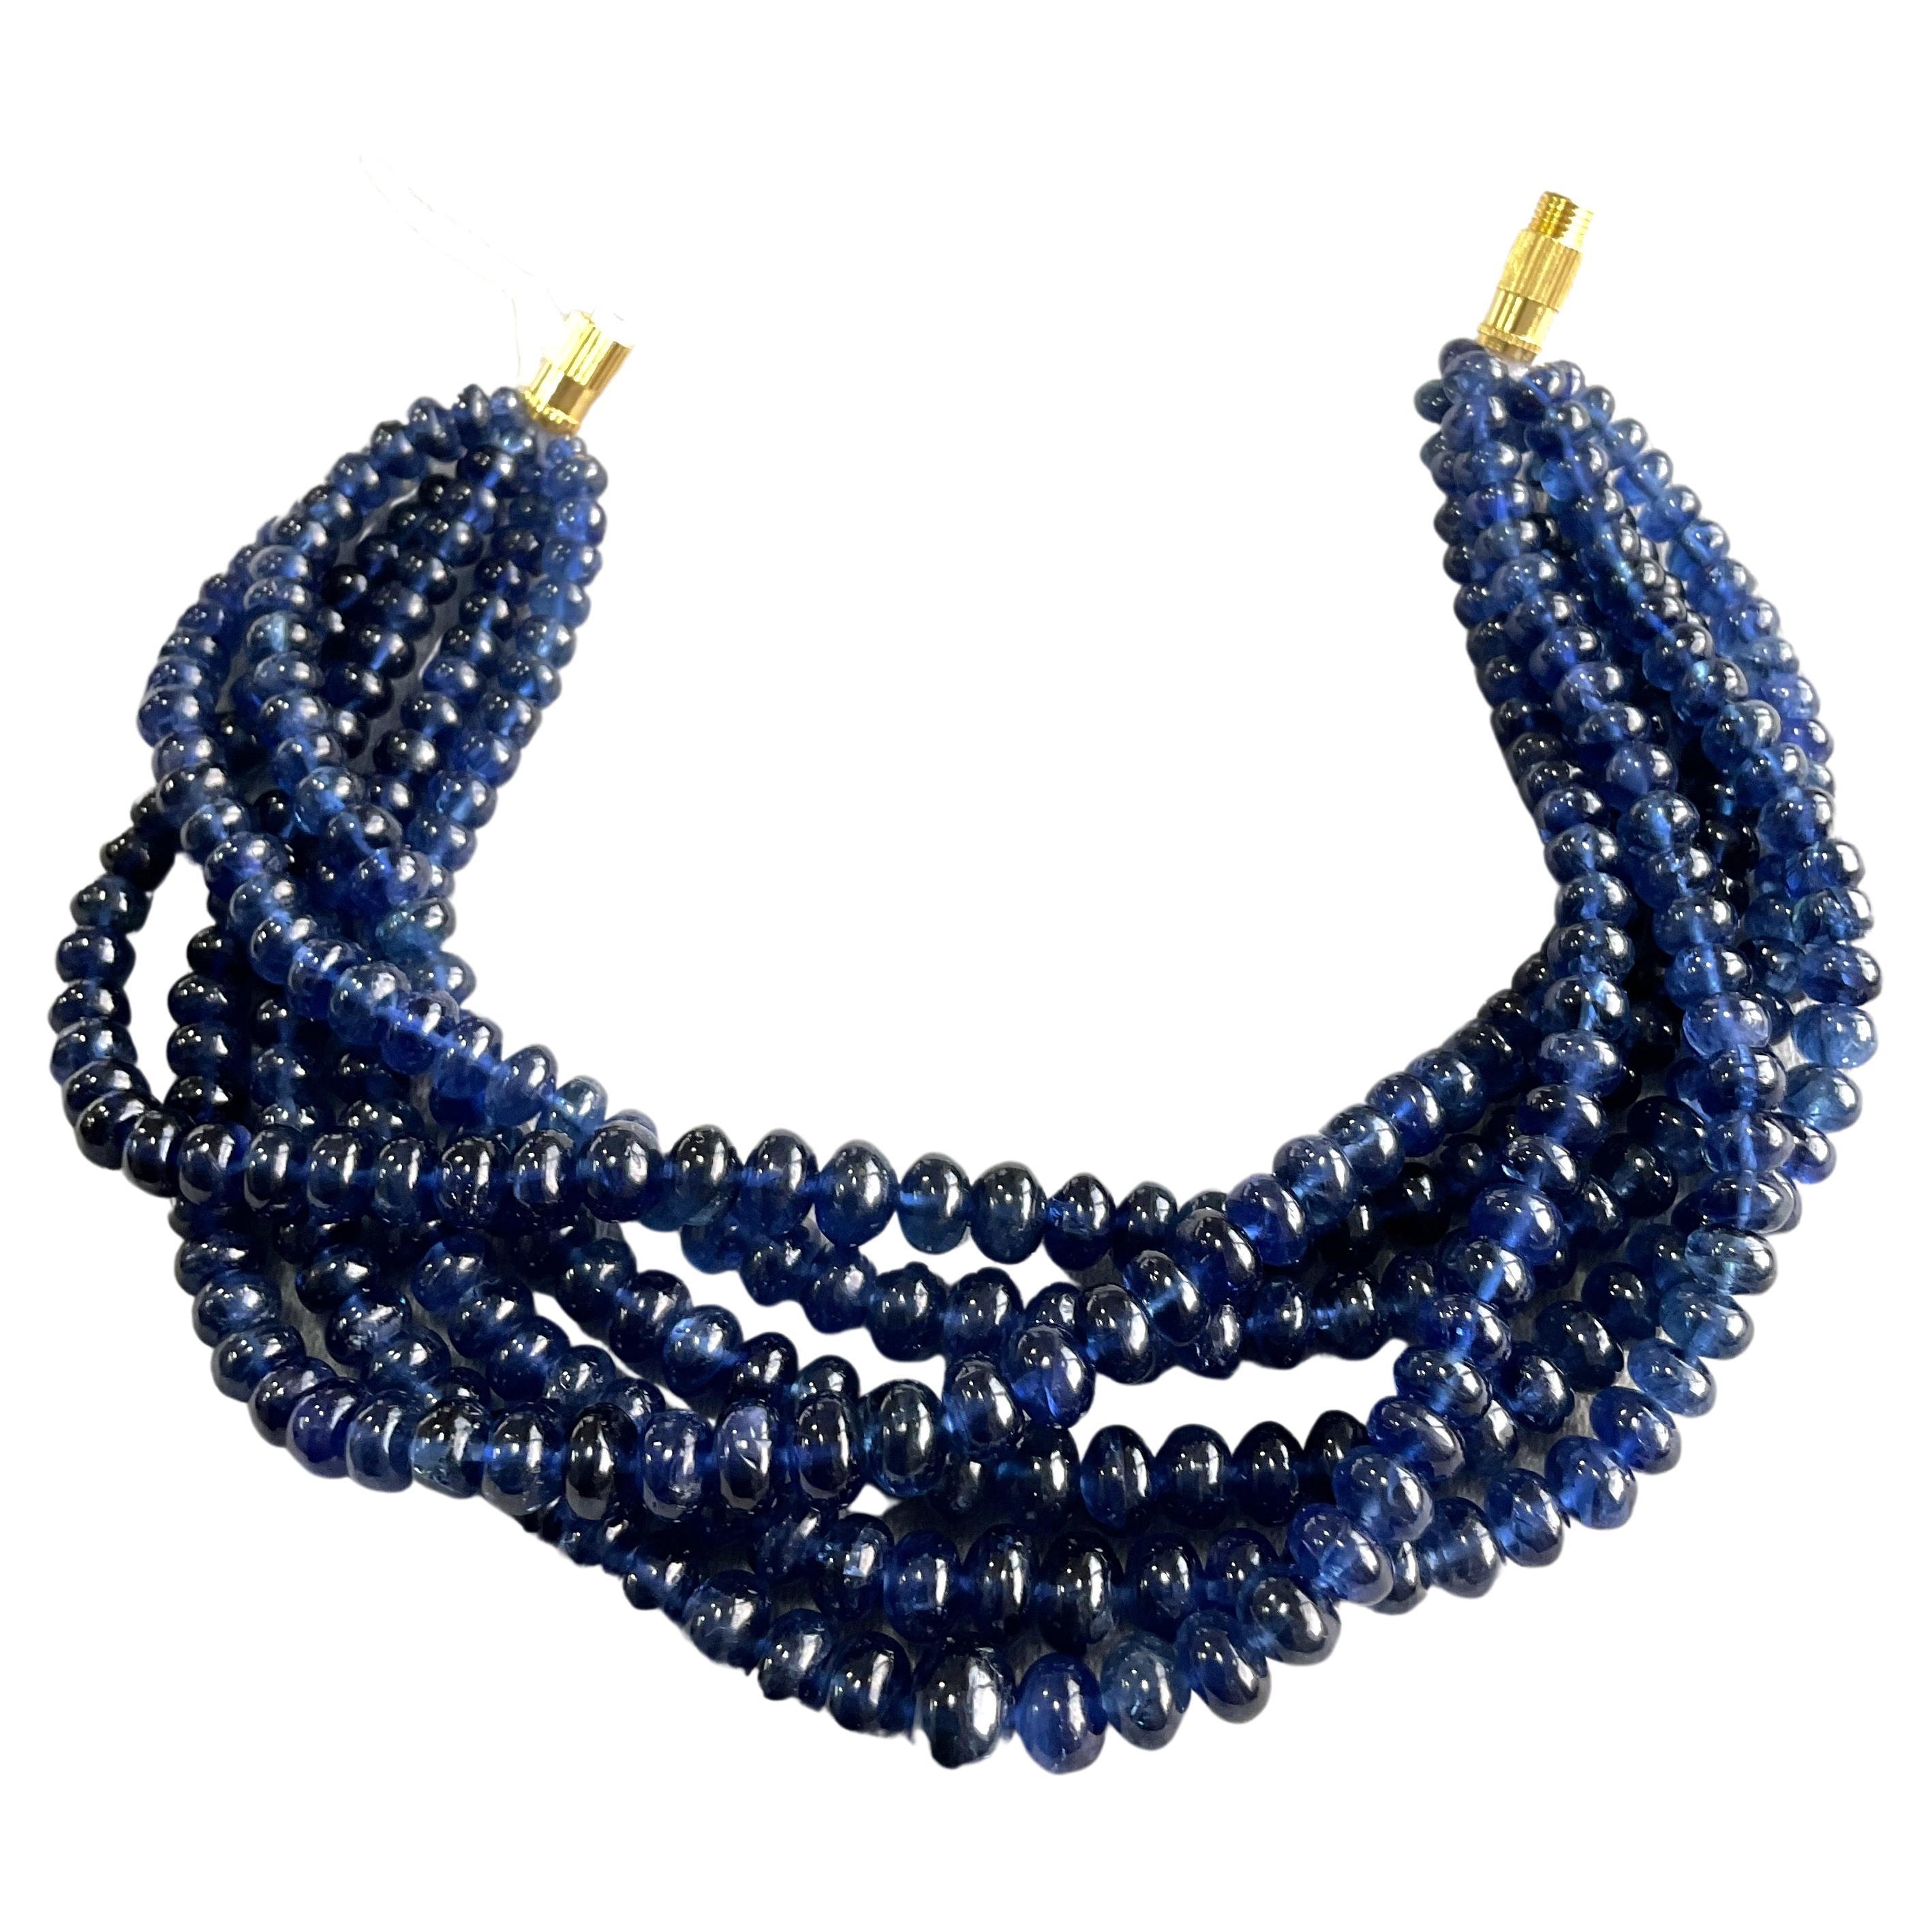 270.70 Carats Blue Sapphire Beaded gem Quality Necklace no heat burmese sapphire For Sale